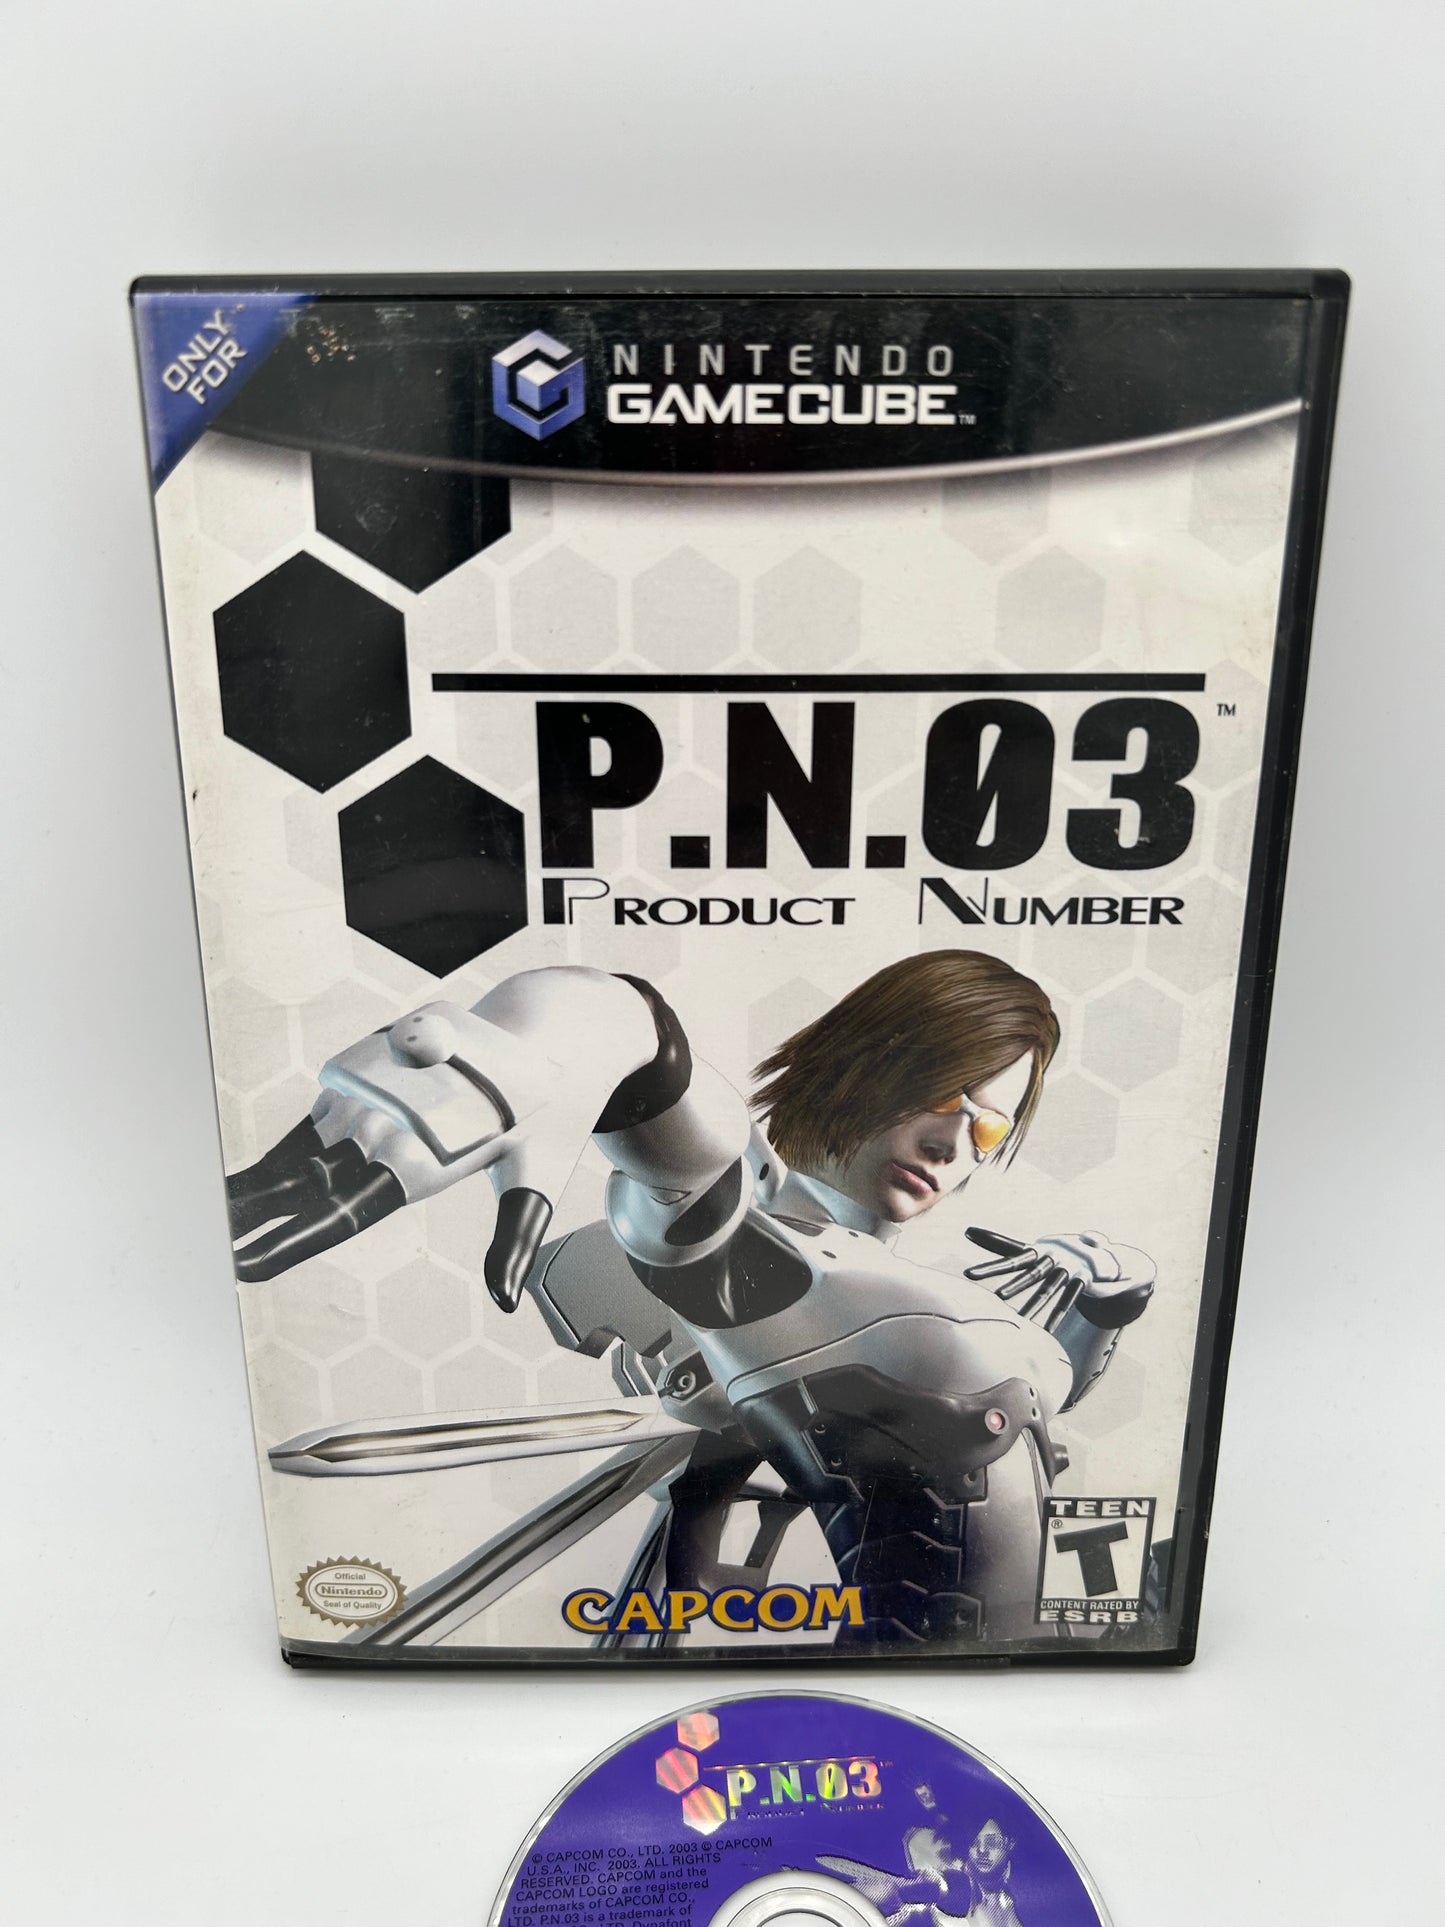 NiNTENDO GAMECUBE [NGC] | PN 03 PRODUCT NUMBER